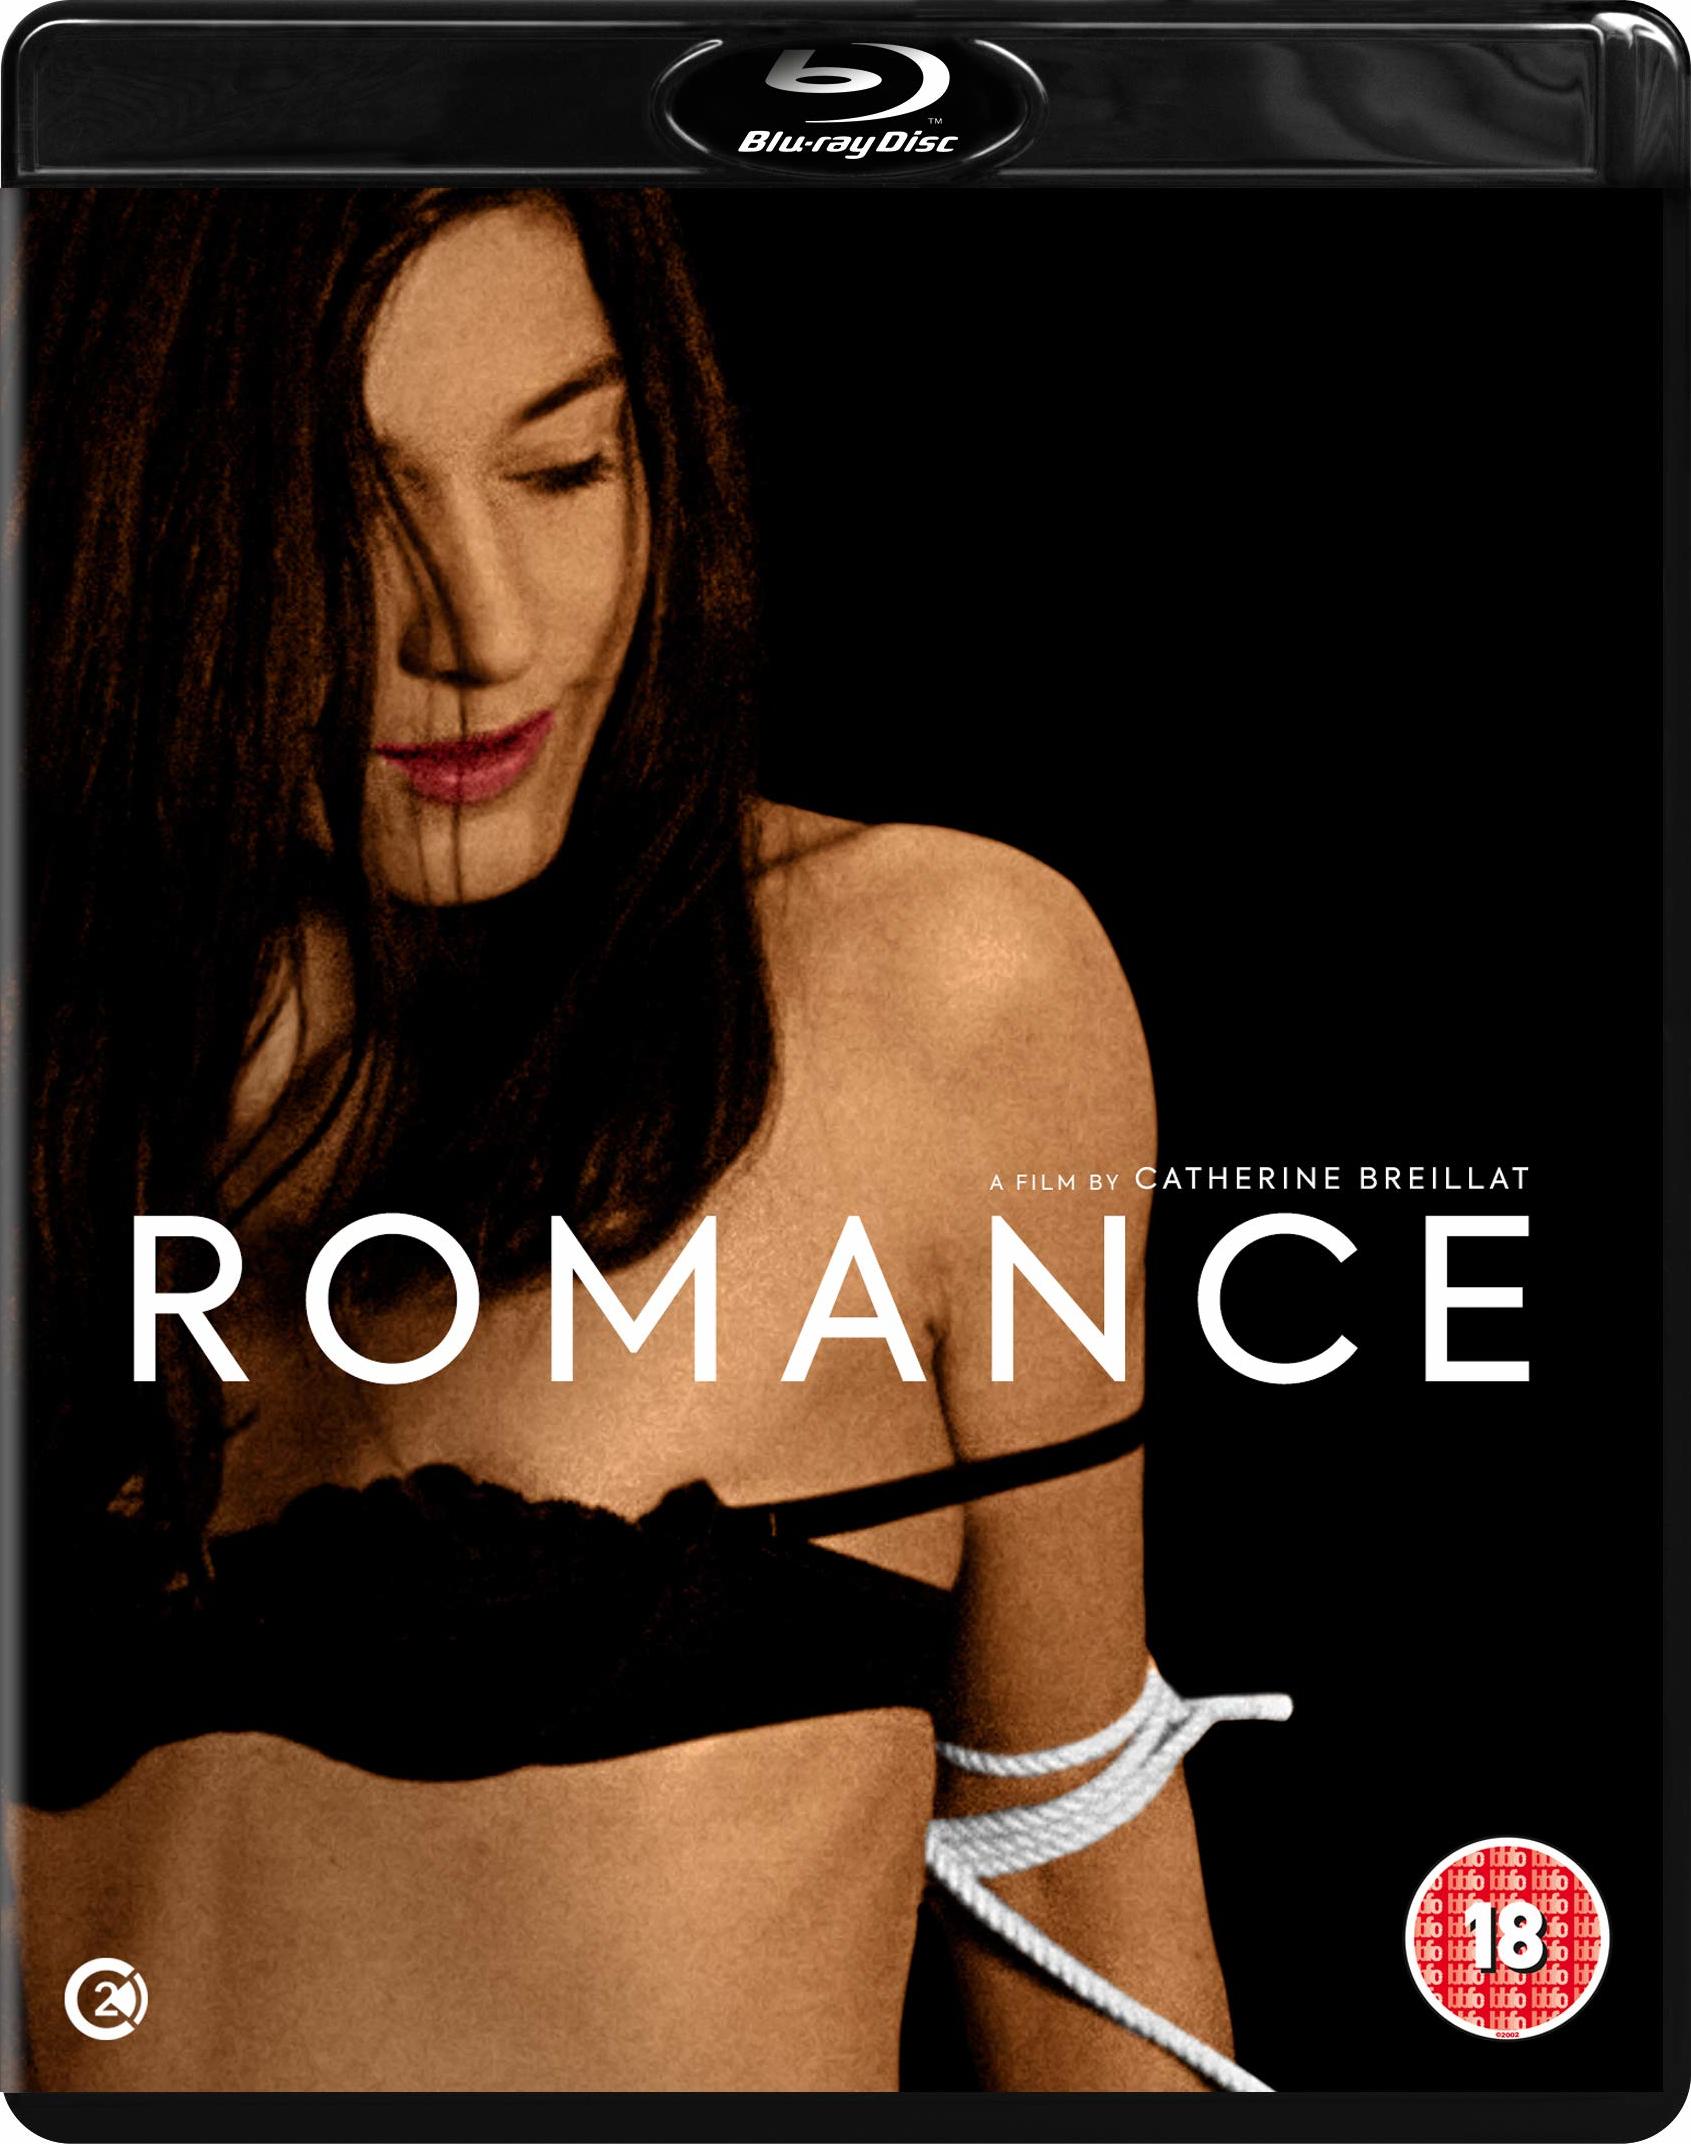 [罗曼史].Romance.1999.GBR.BluRay.1080p.AVC.DTS-HD.MA.5.1-DiY@HDHome     39.02G-1.jpg